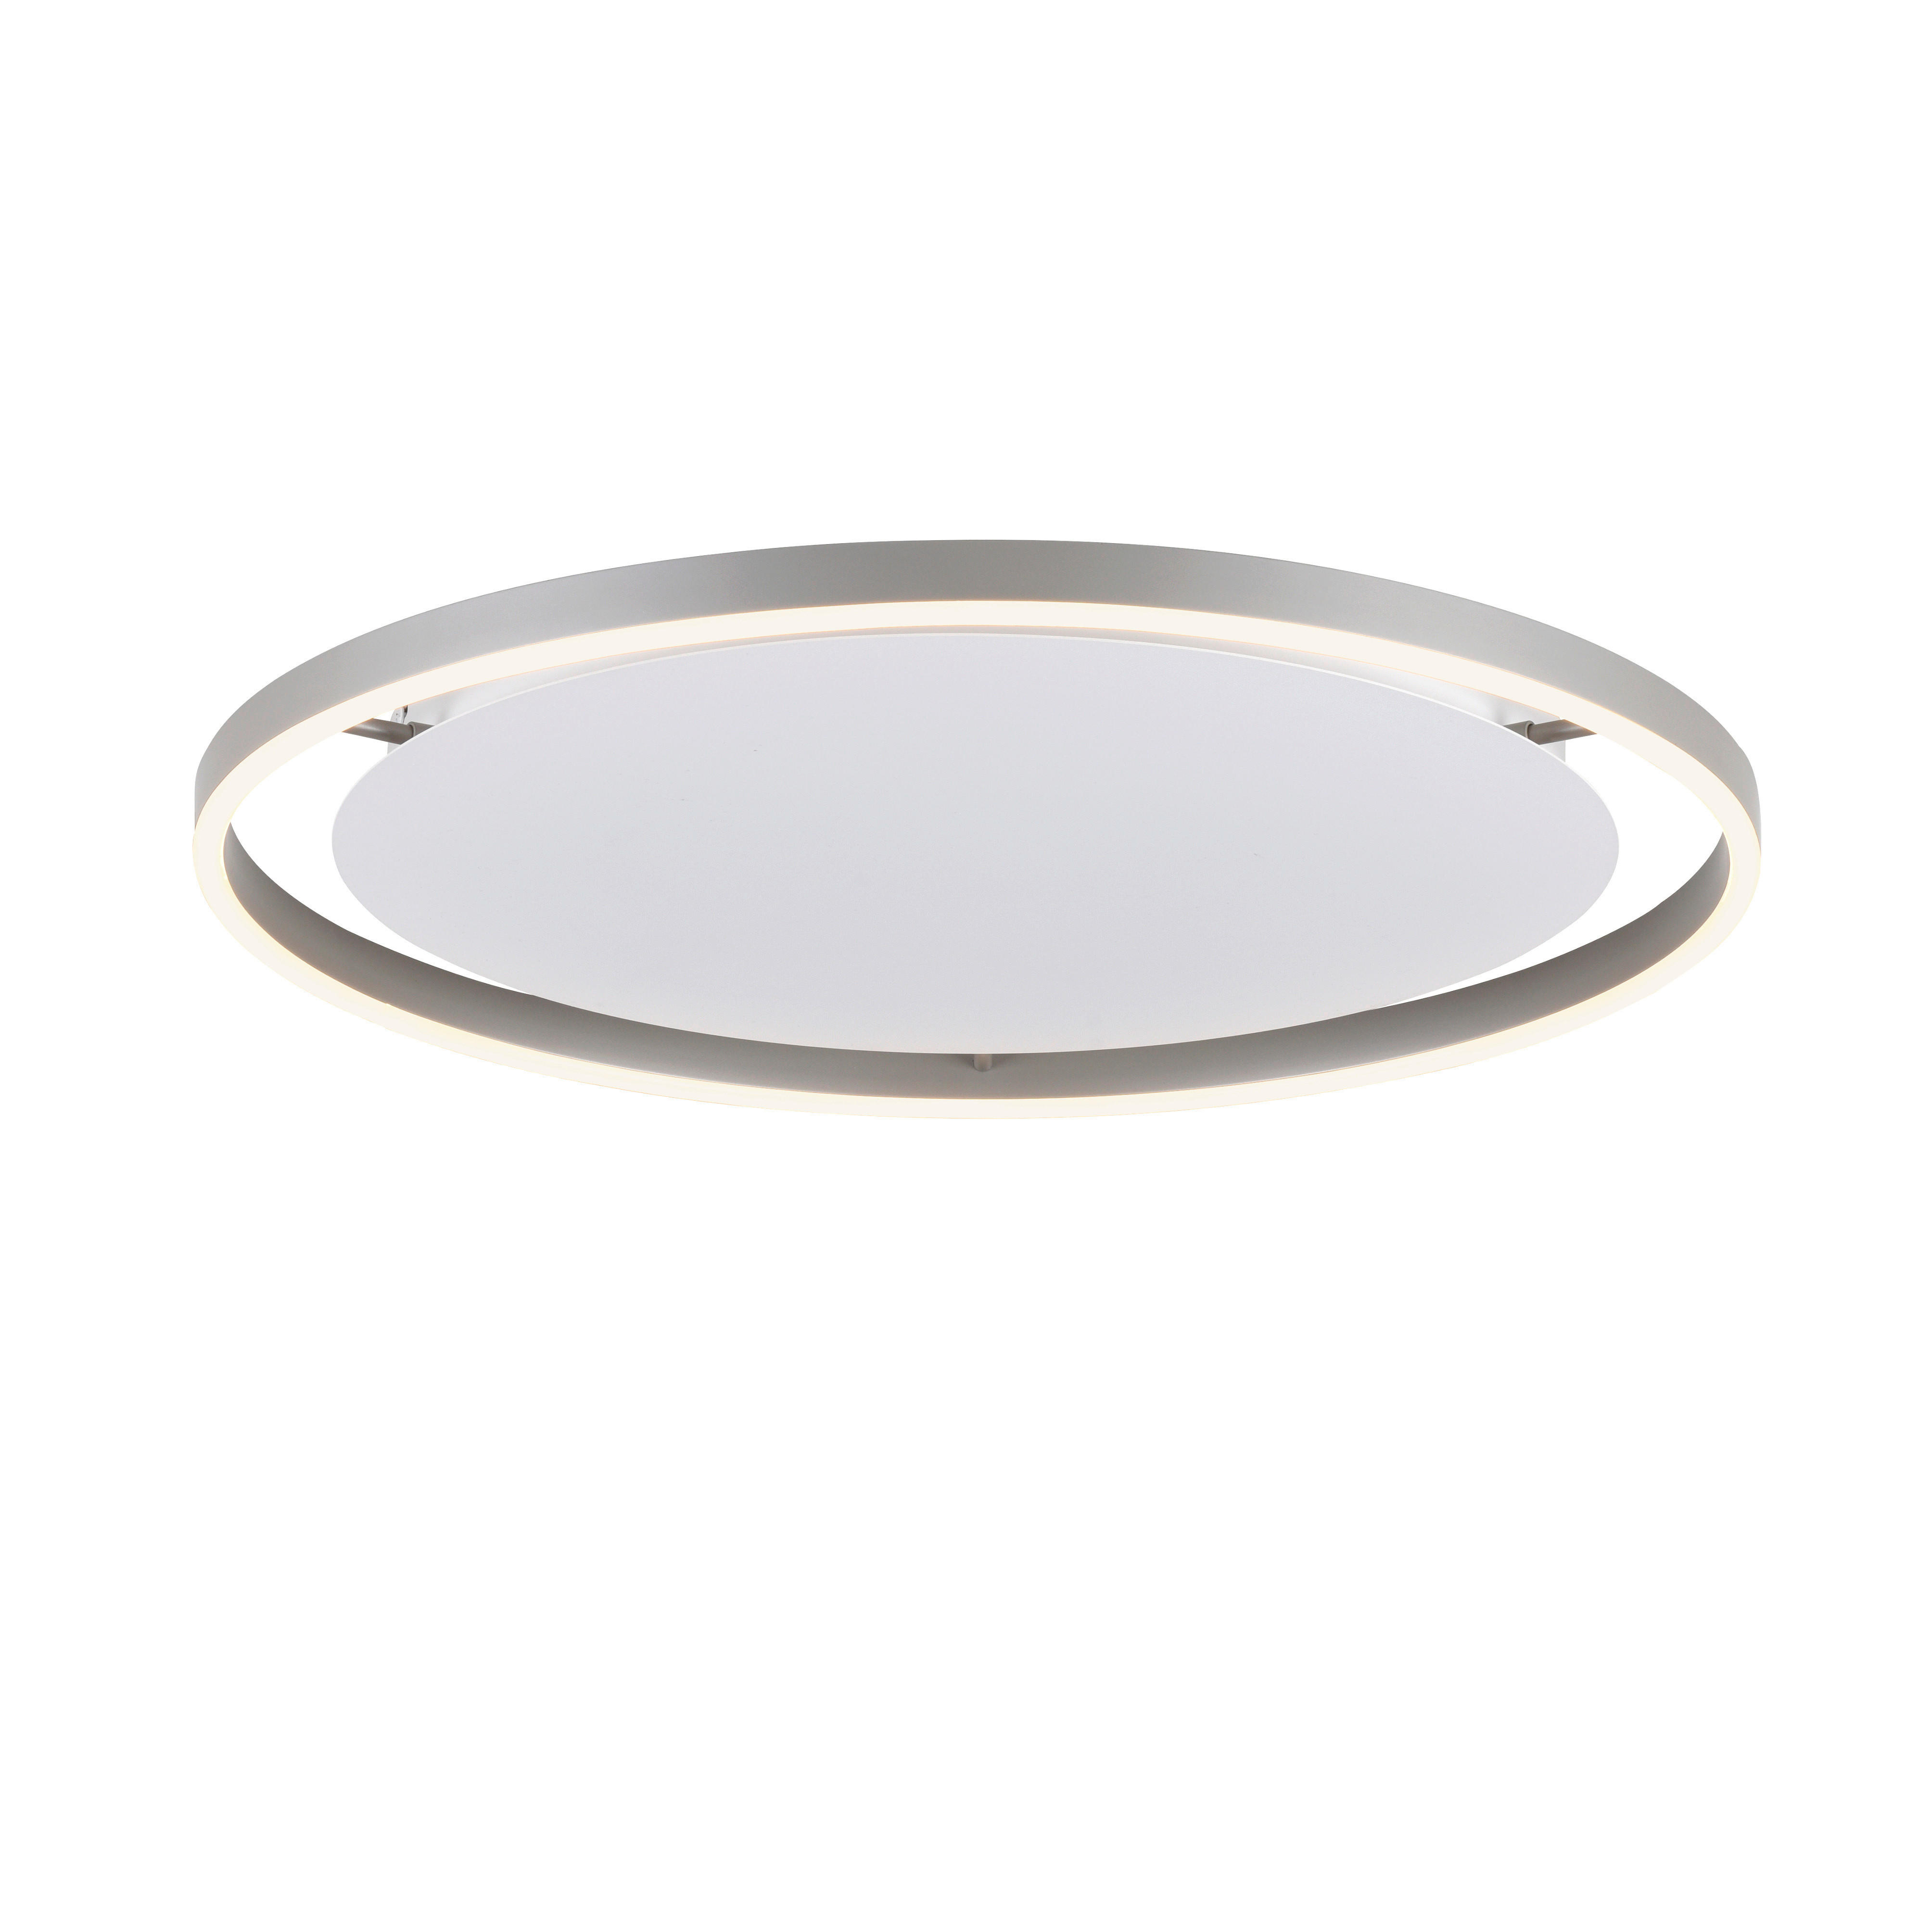 LED-DECKENLEUCHTE 28 W    58,5/58,5/5,3 cm  - Alufarben, Design, Kunststoff/Metall (58,5/58,5/5,3cm)